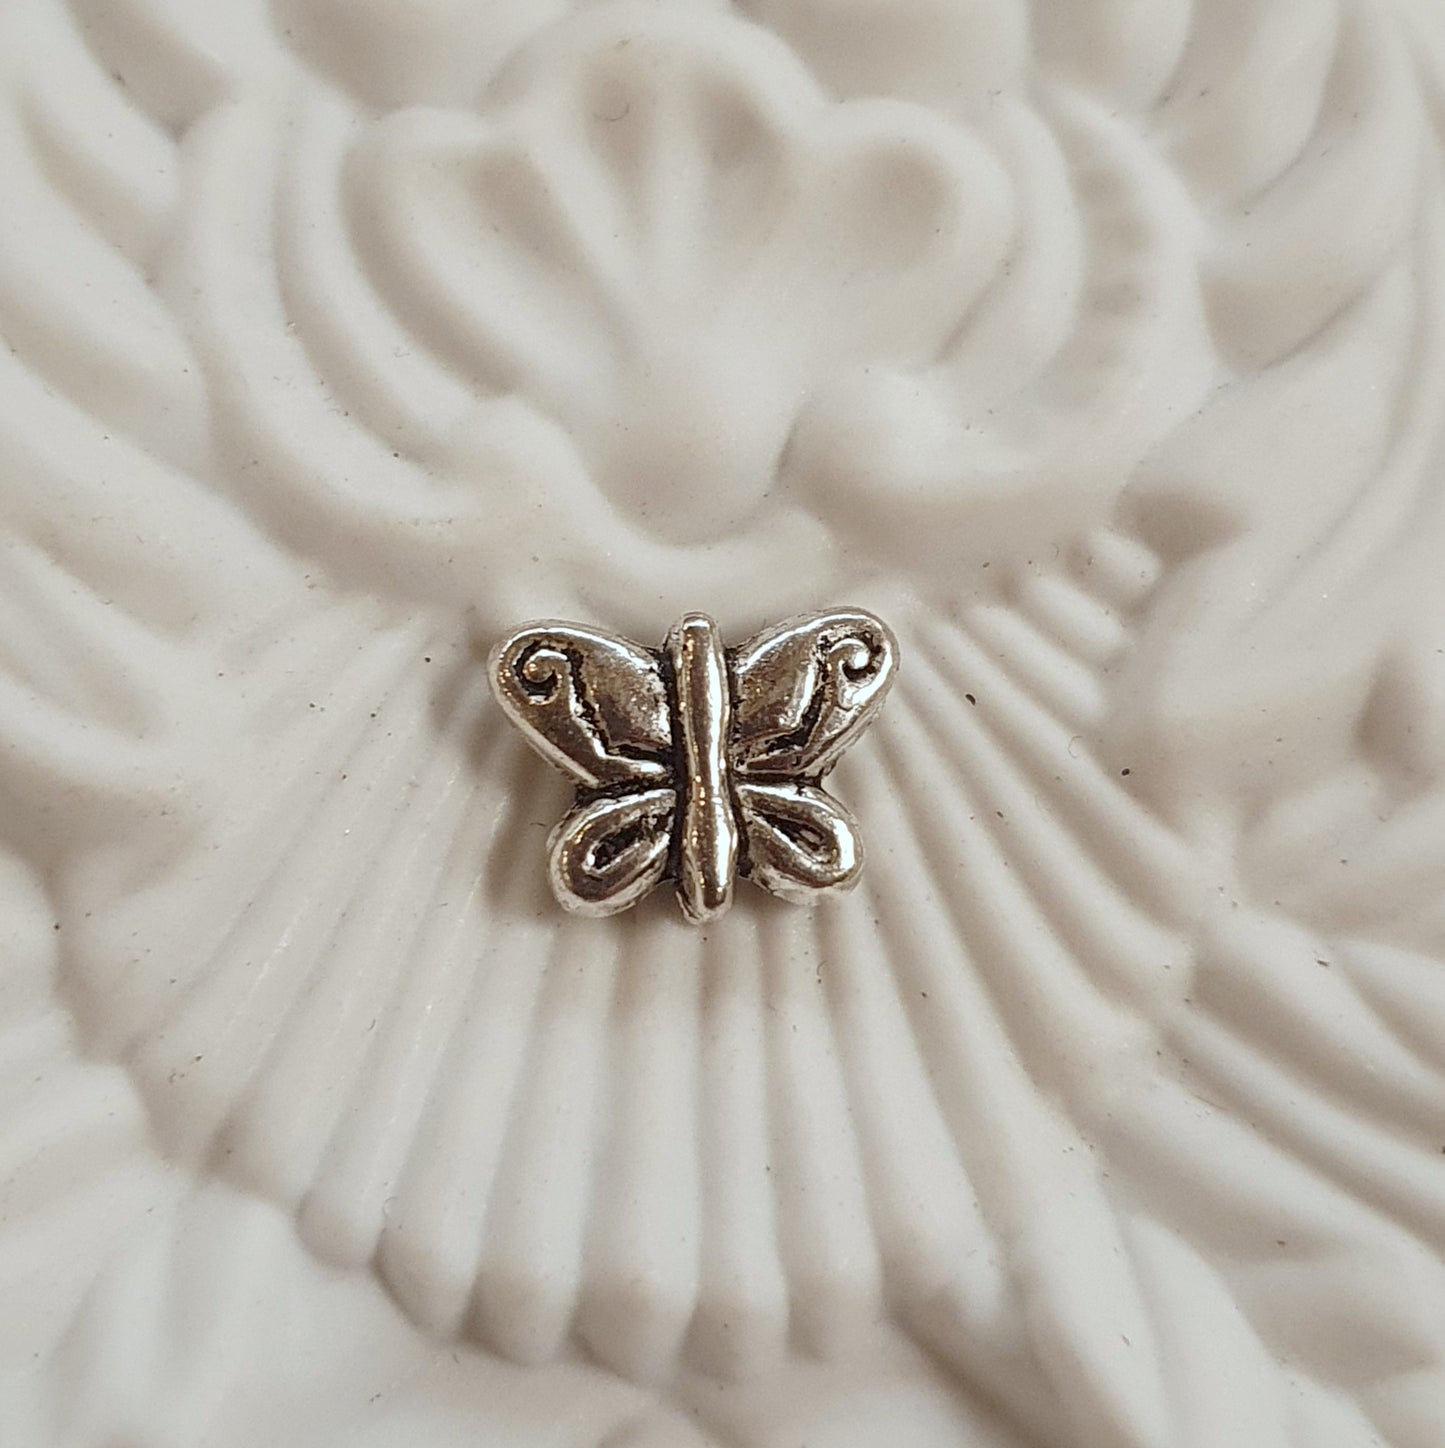 2 Metallperlen Schmetterling, antik silberfarbig, 9mm